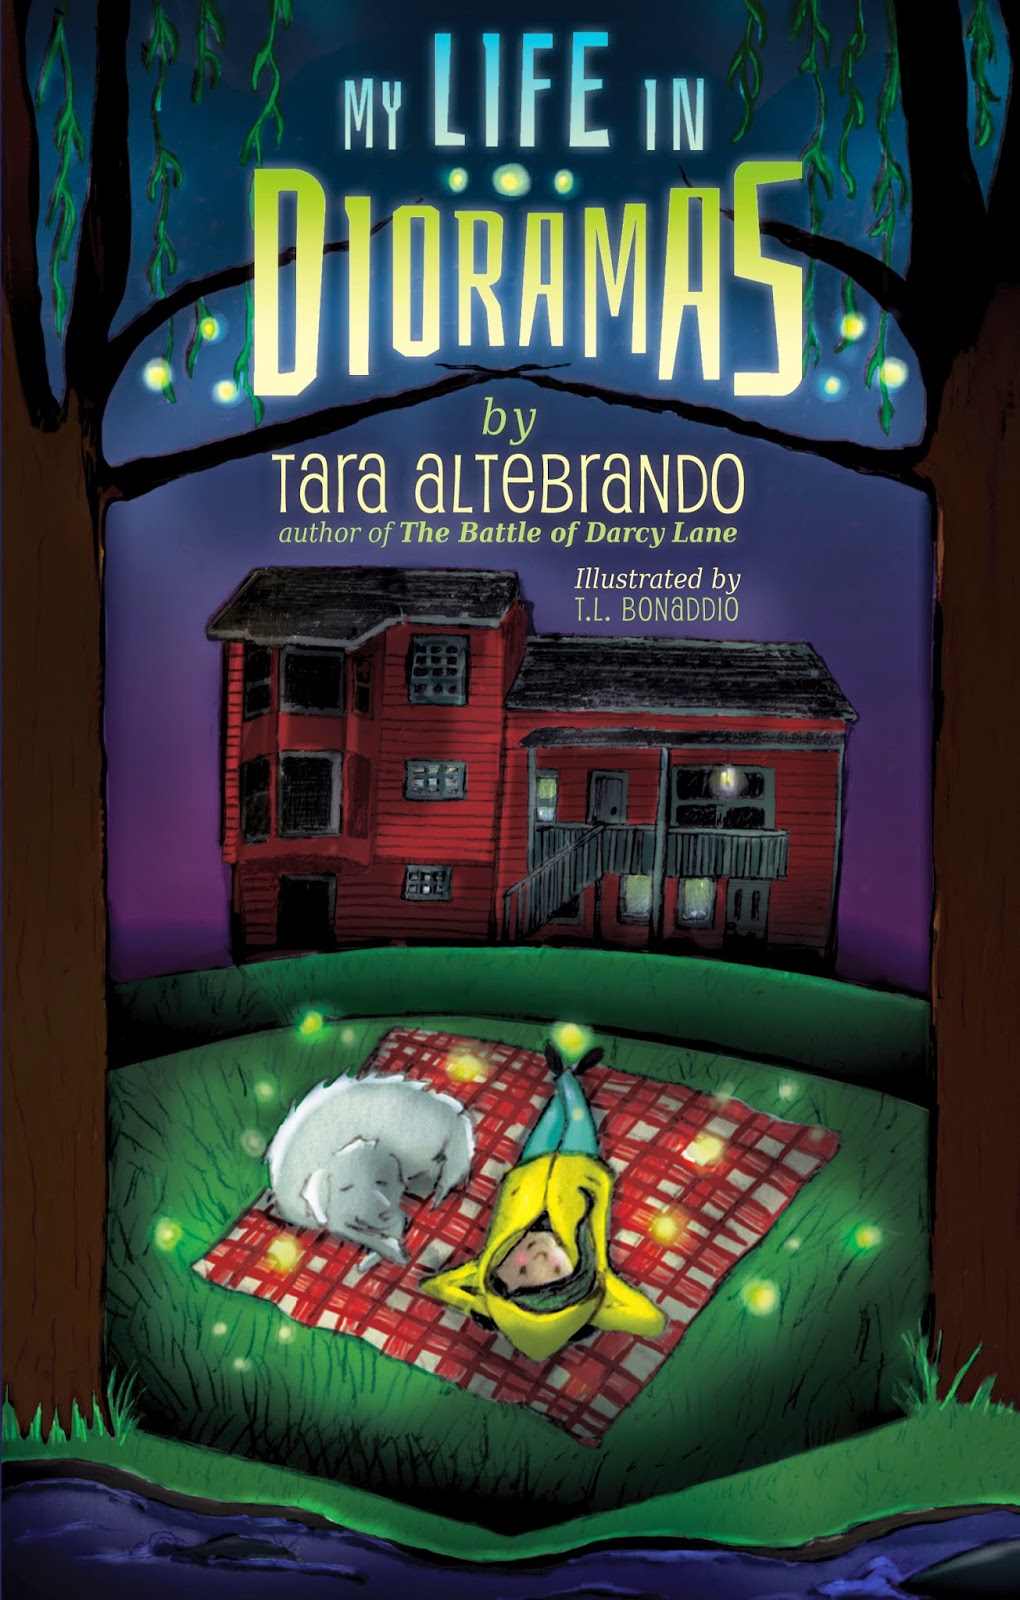 Guest Post: Tara Altebrando on My Life in Dioramas